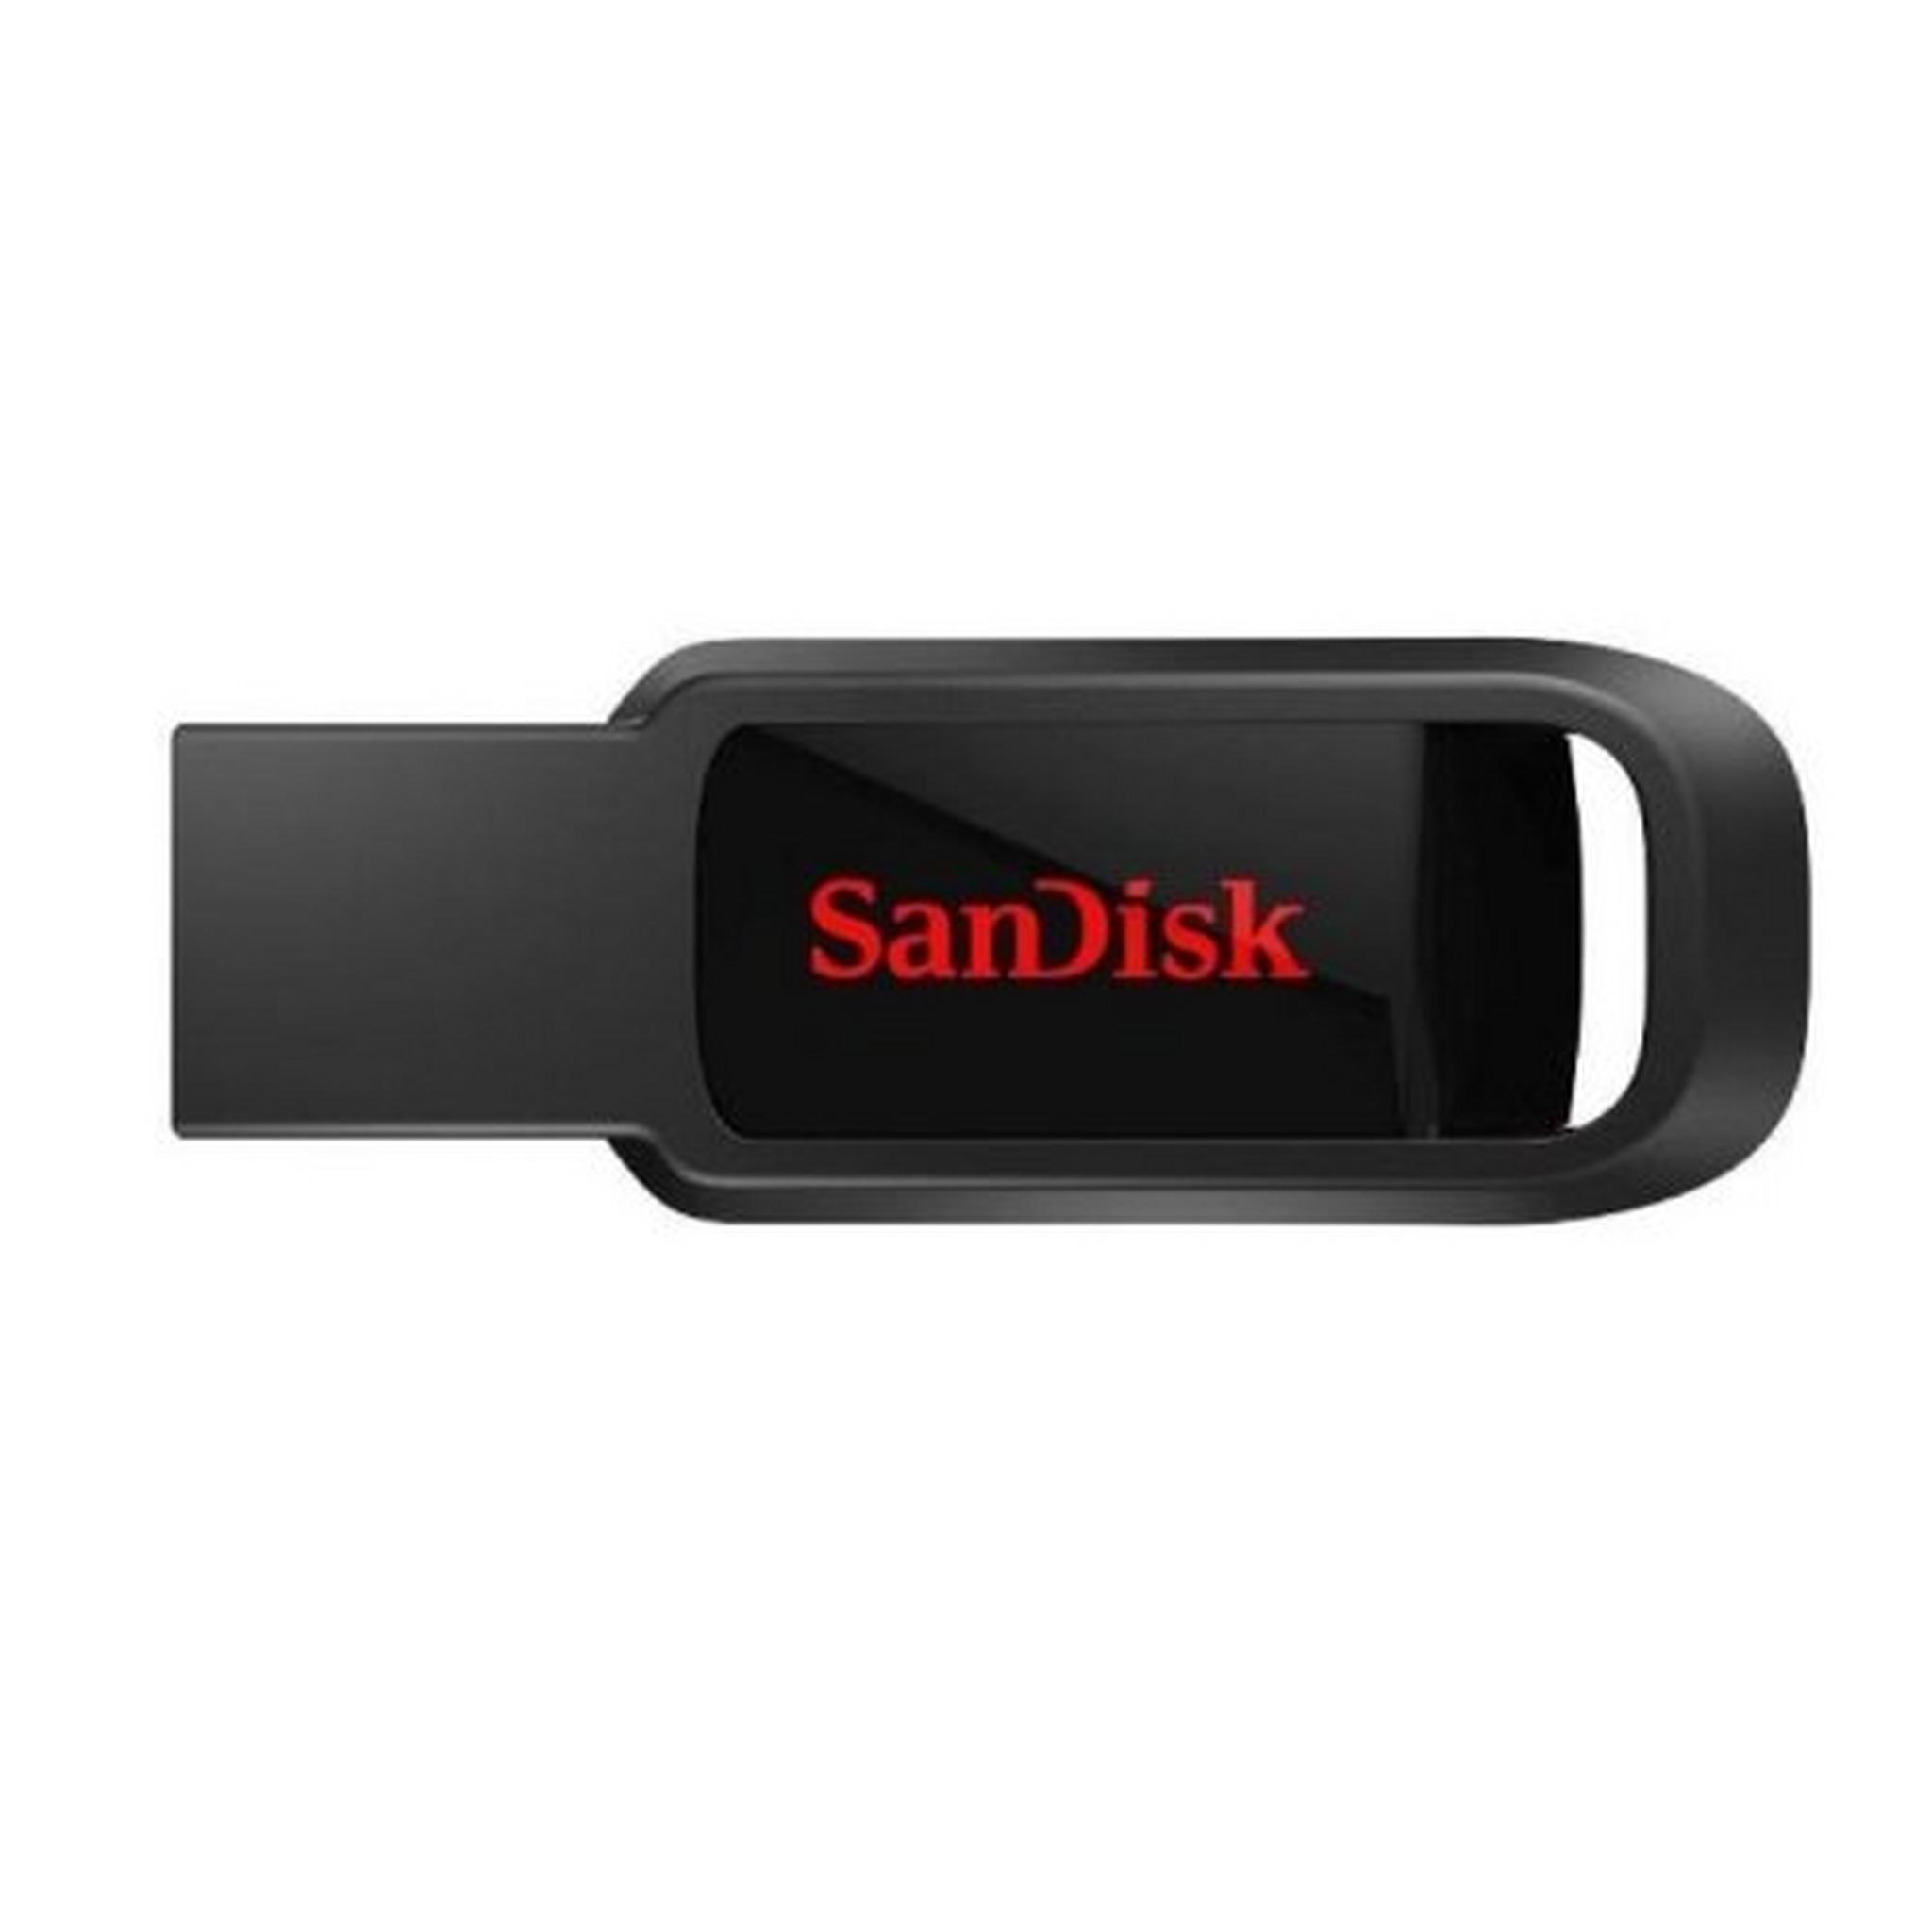 SanDisk Cruzer Spark USB 2.0 Flash Drive - 16GB